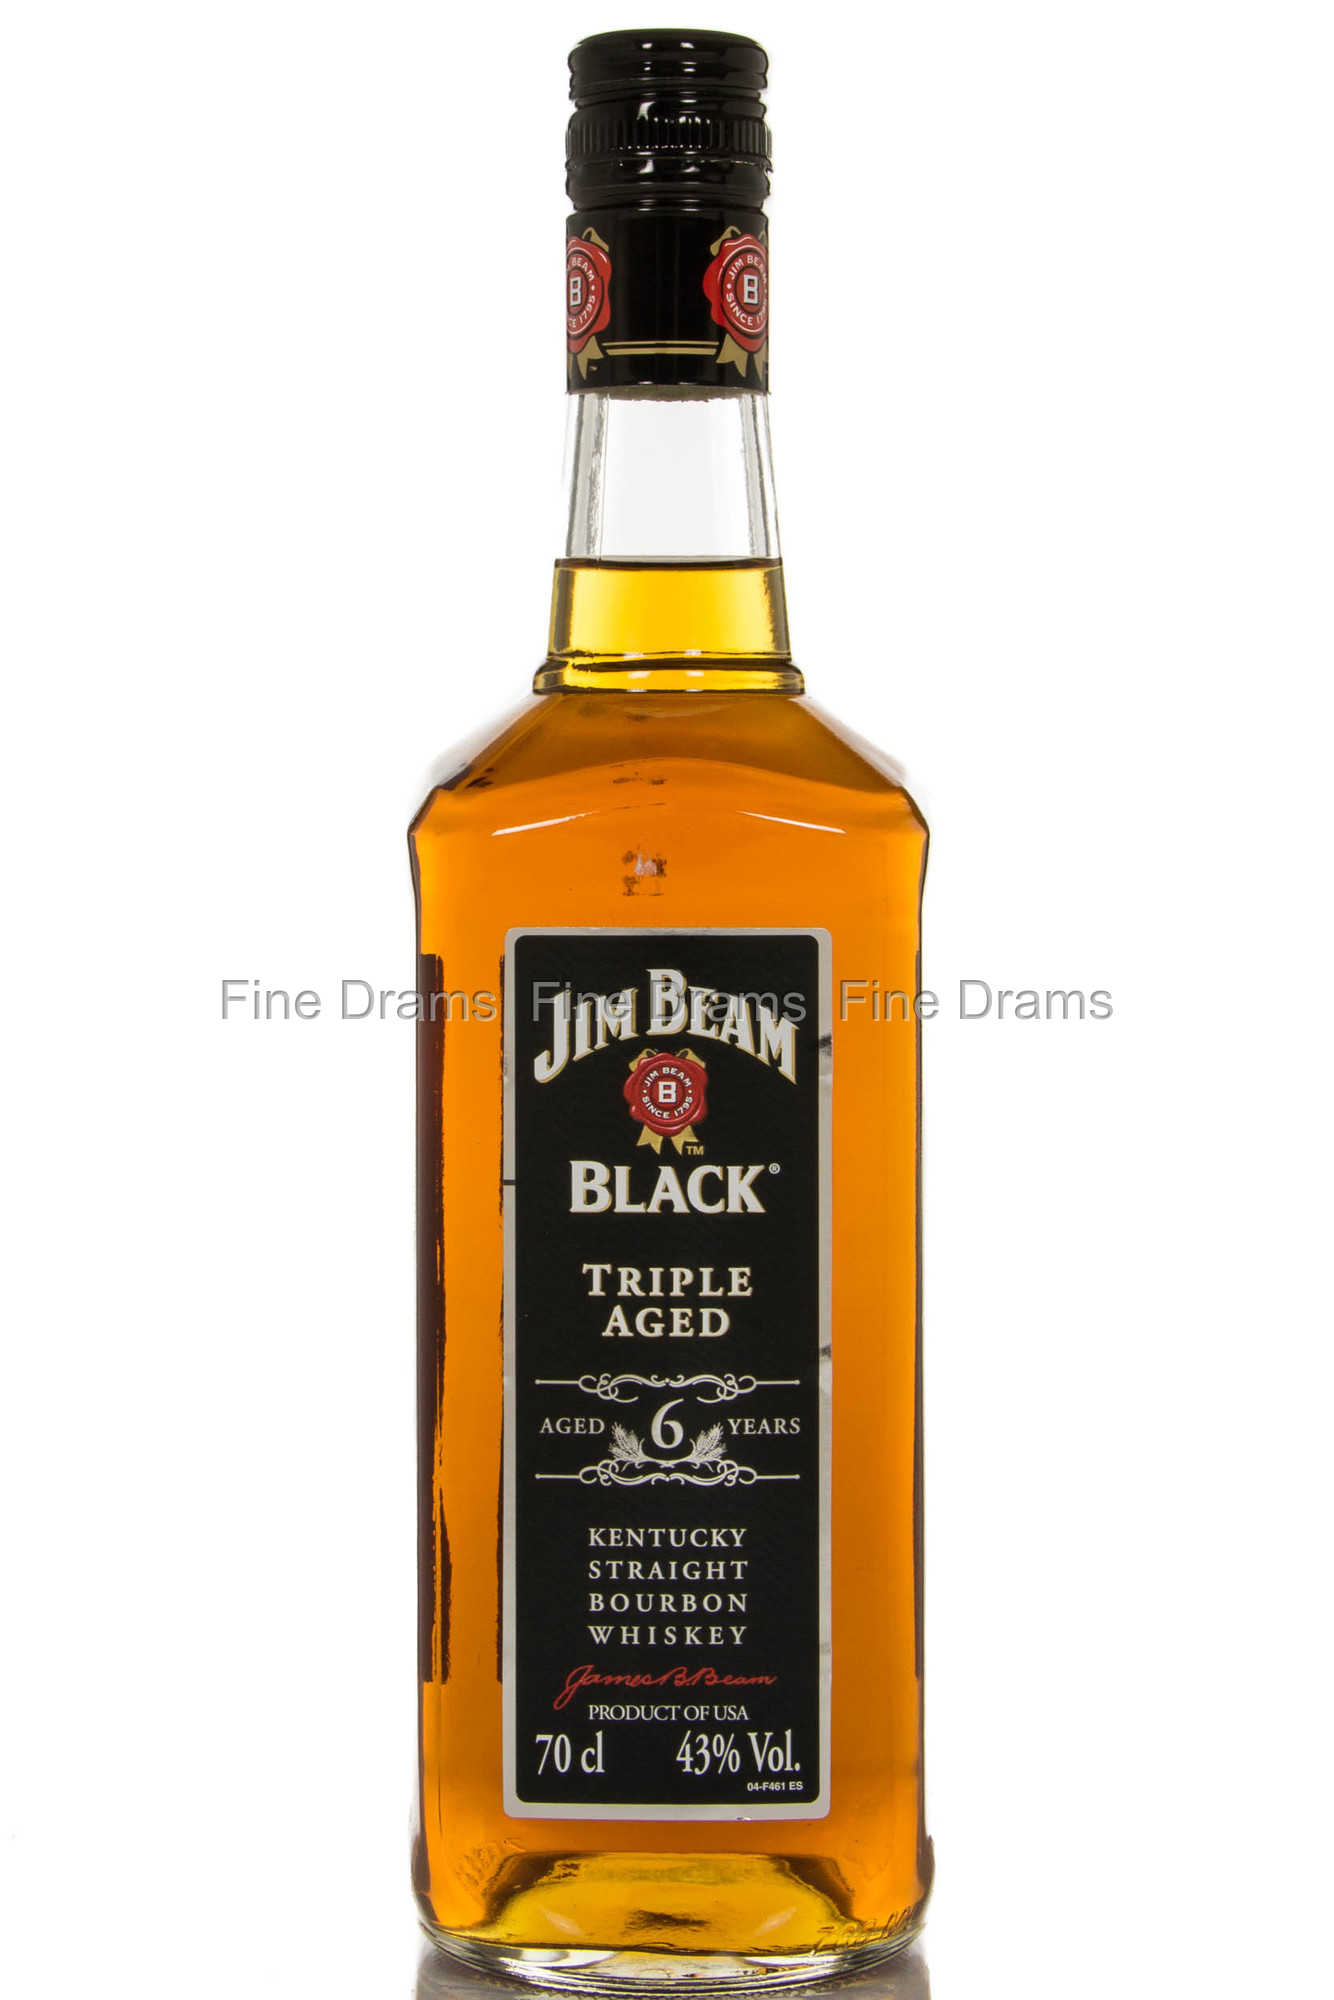 Jim Beam Black 6 Year Old Bourbon Whiskey